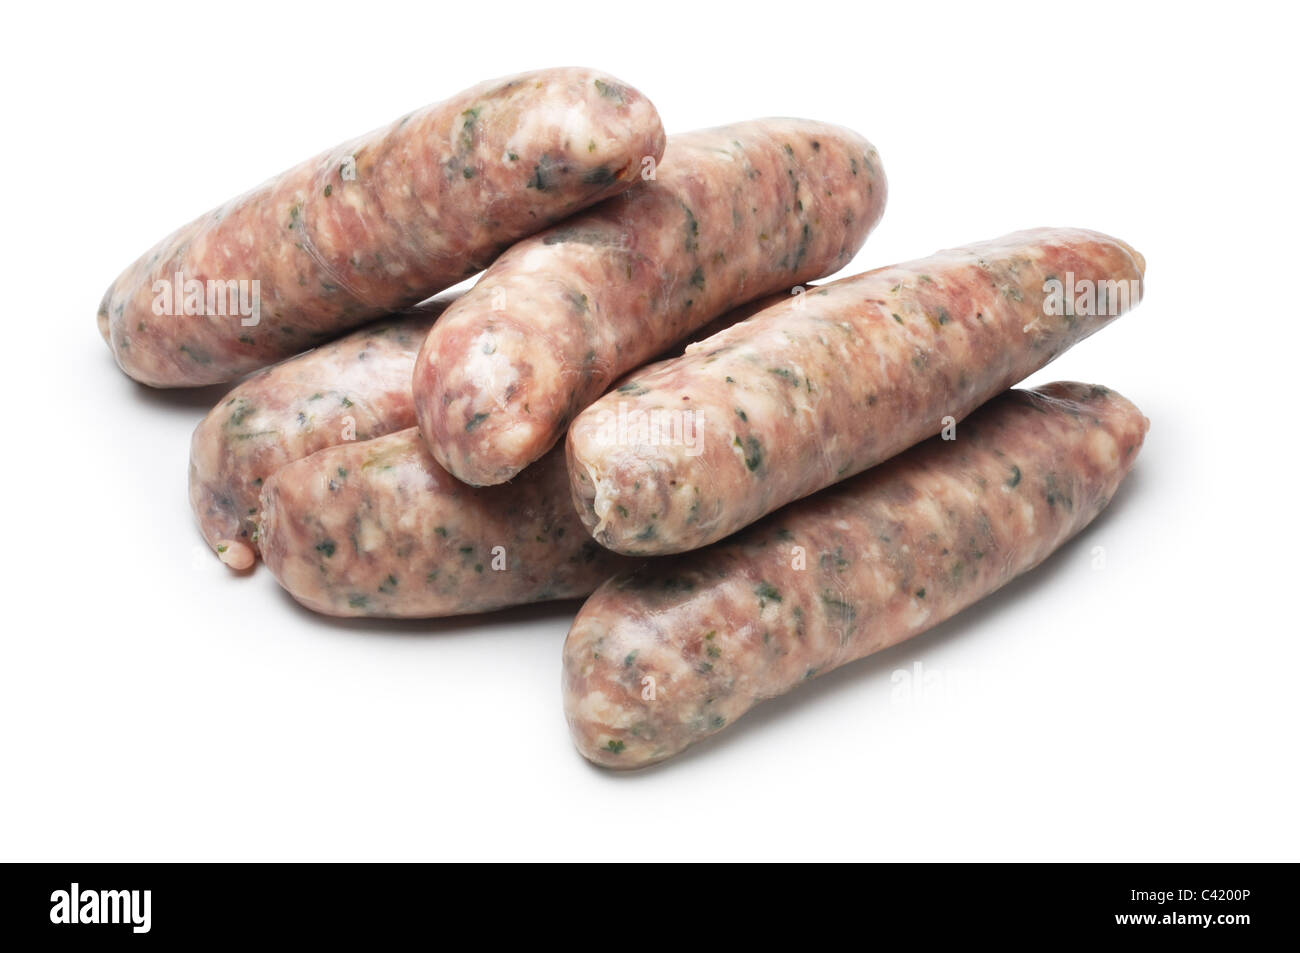 Sausages Stock Photo